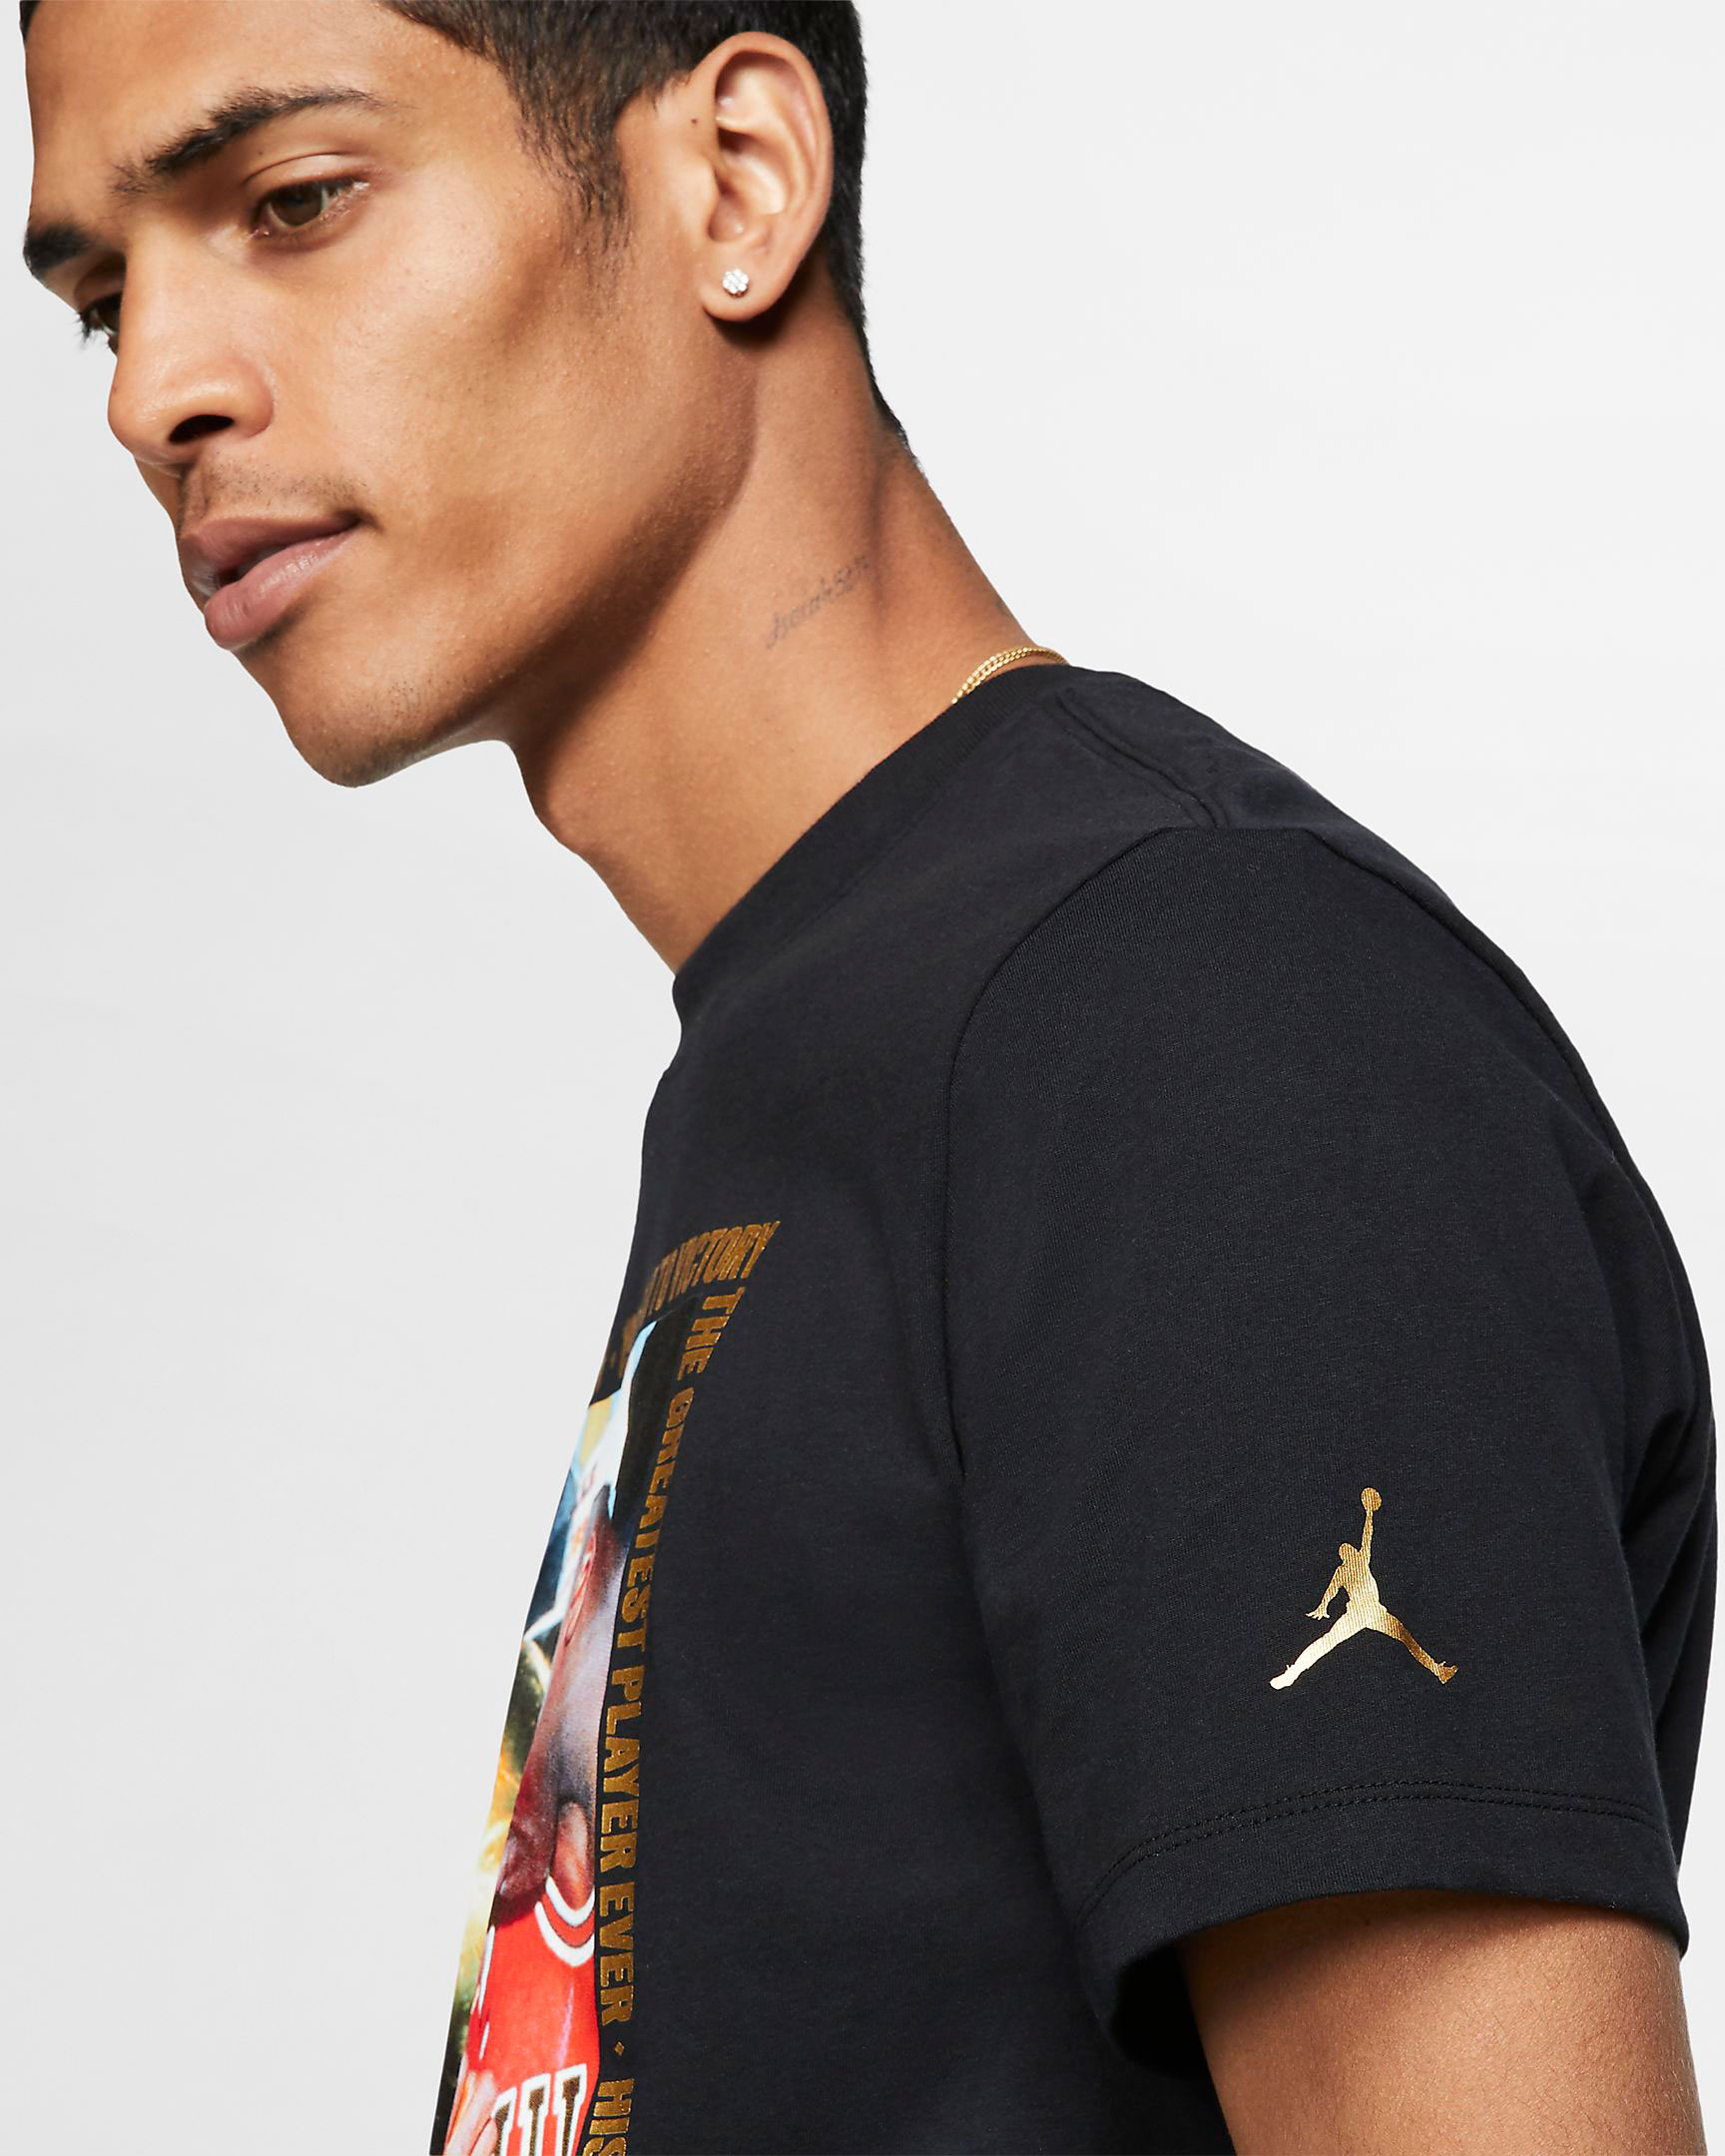 Air Jordan Reflections of a Champion Shirt | SneakerFits.com